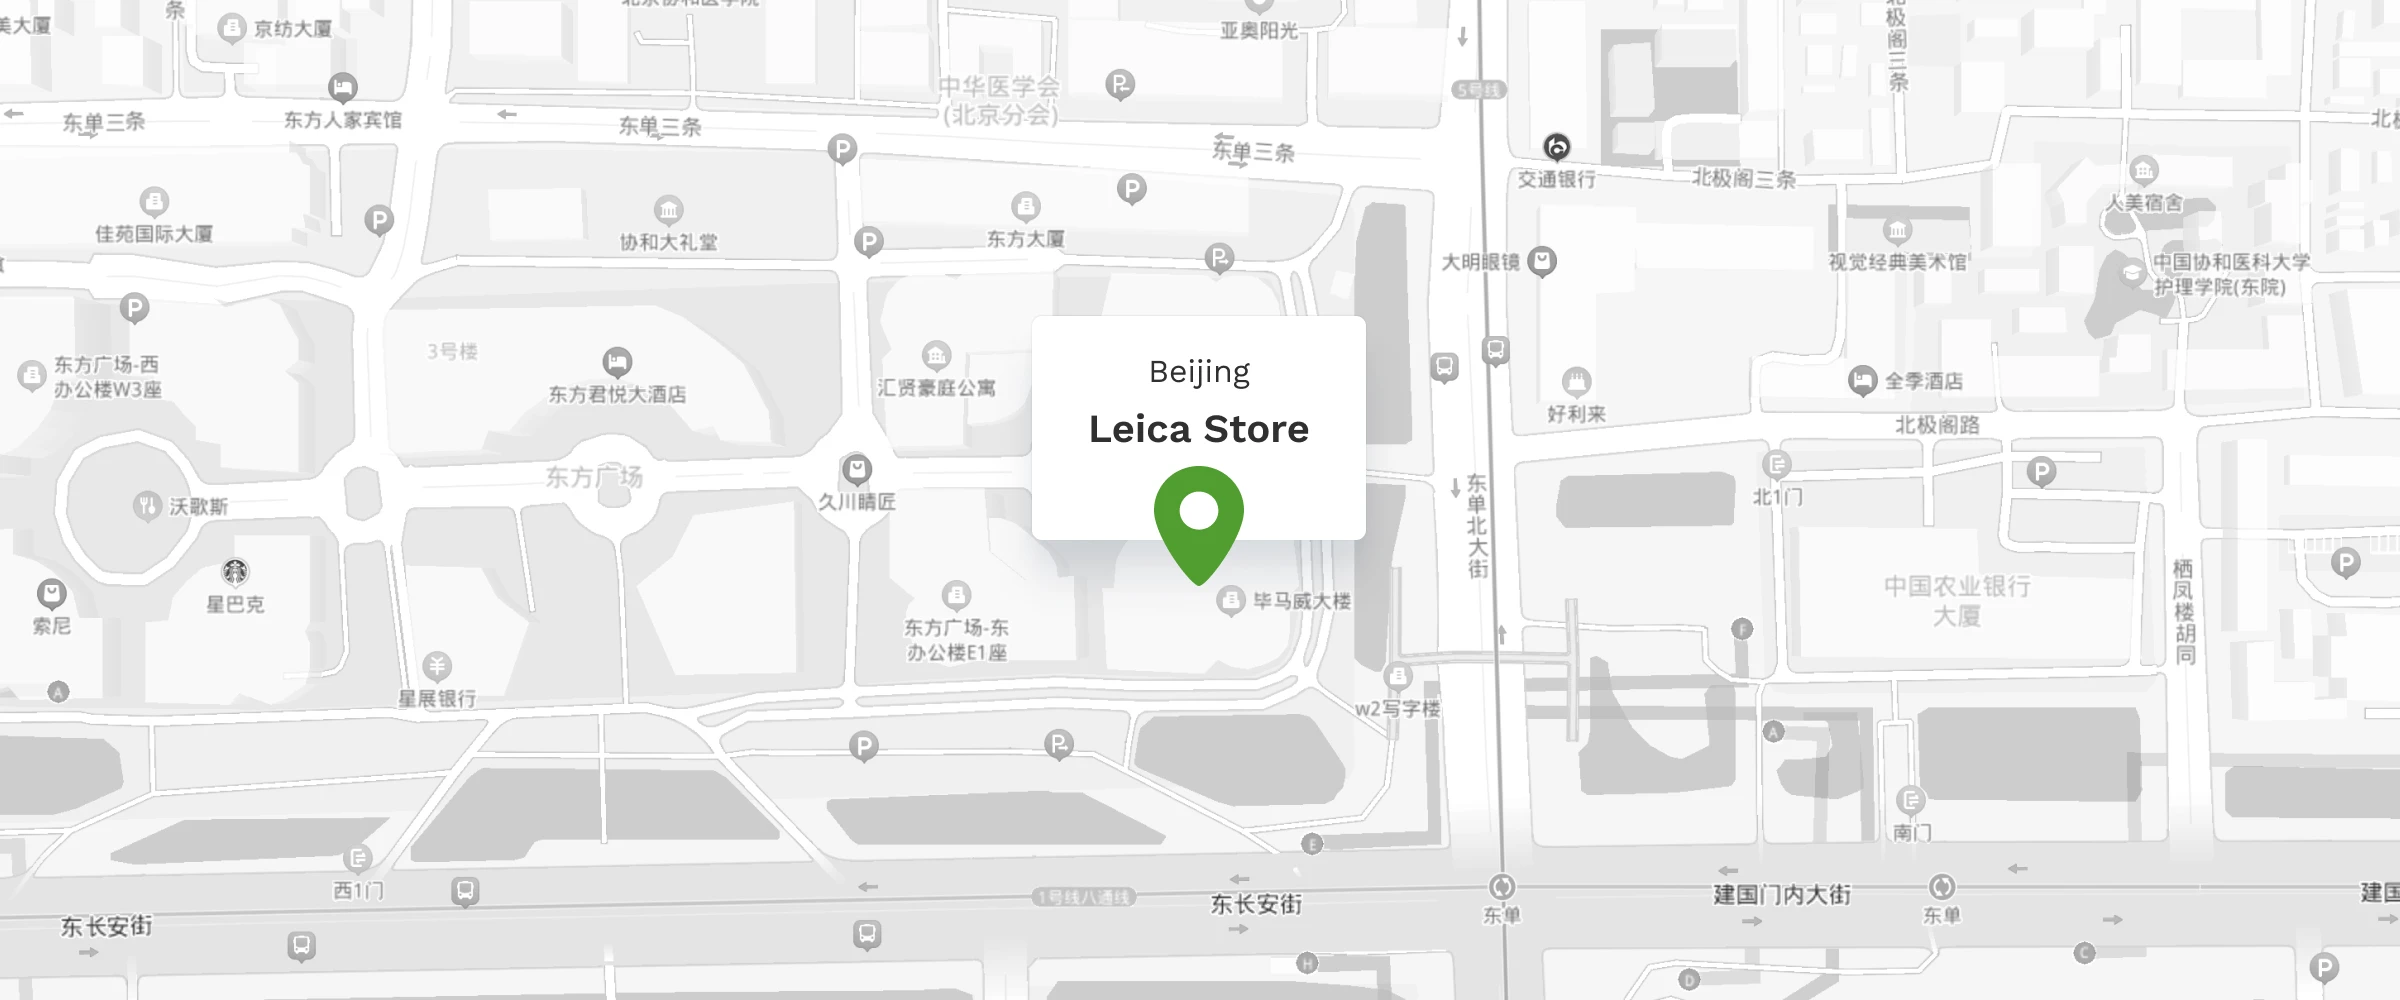 map-LeicaStore-Beijing.jpg